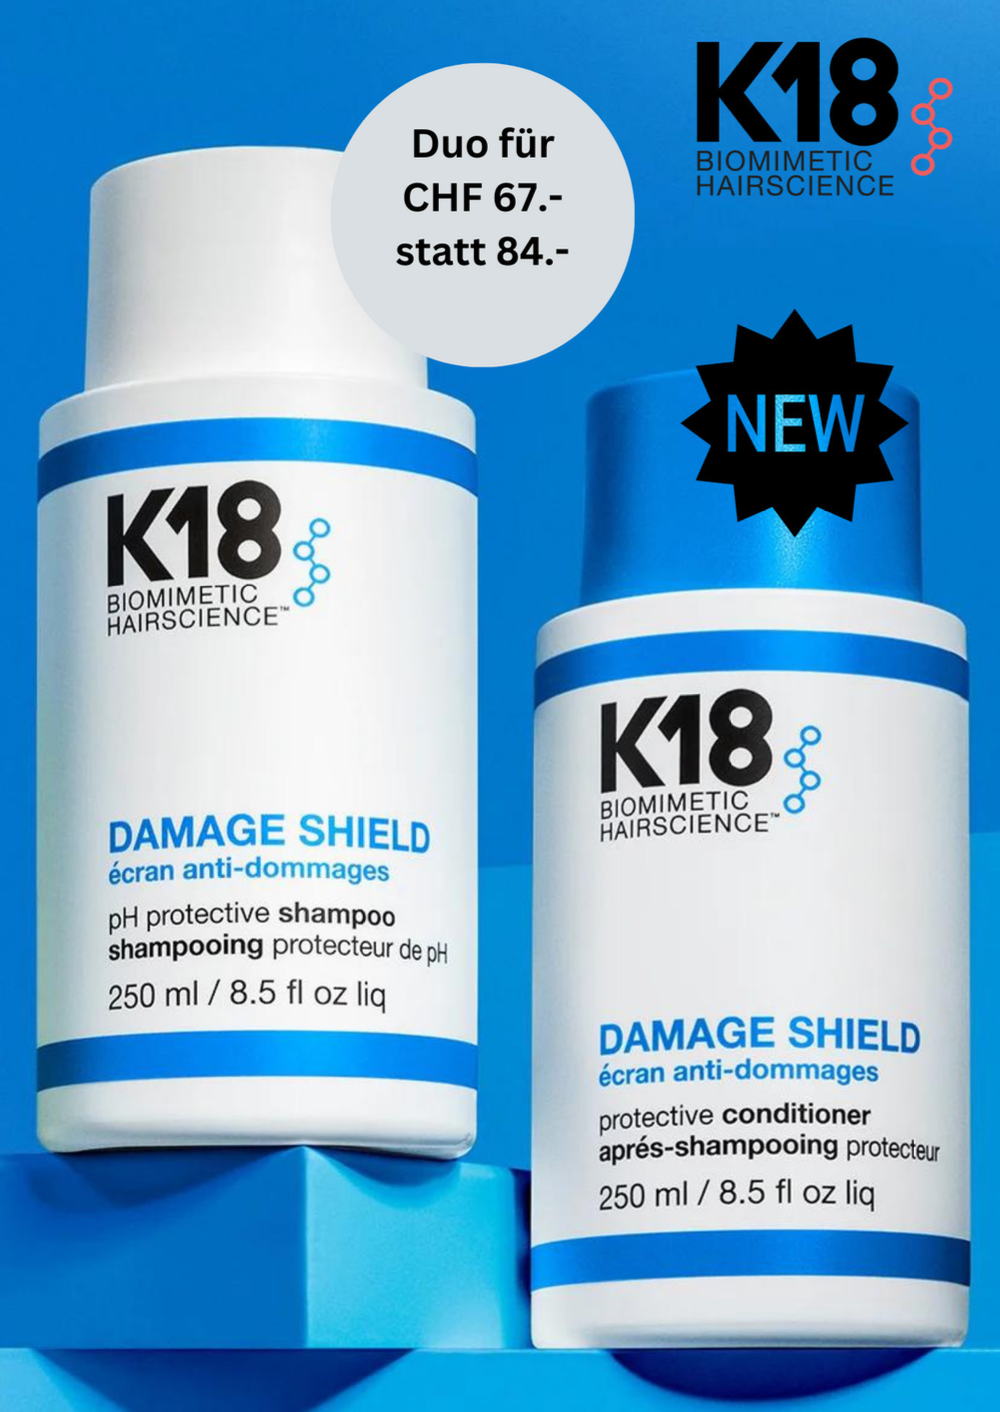 K18 NEWDAMAGE SHIELD protective conditioner